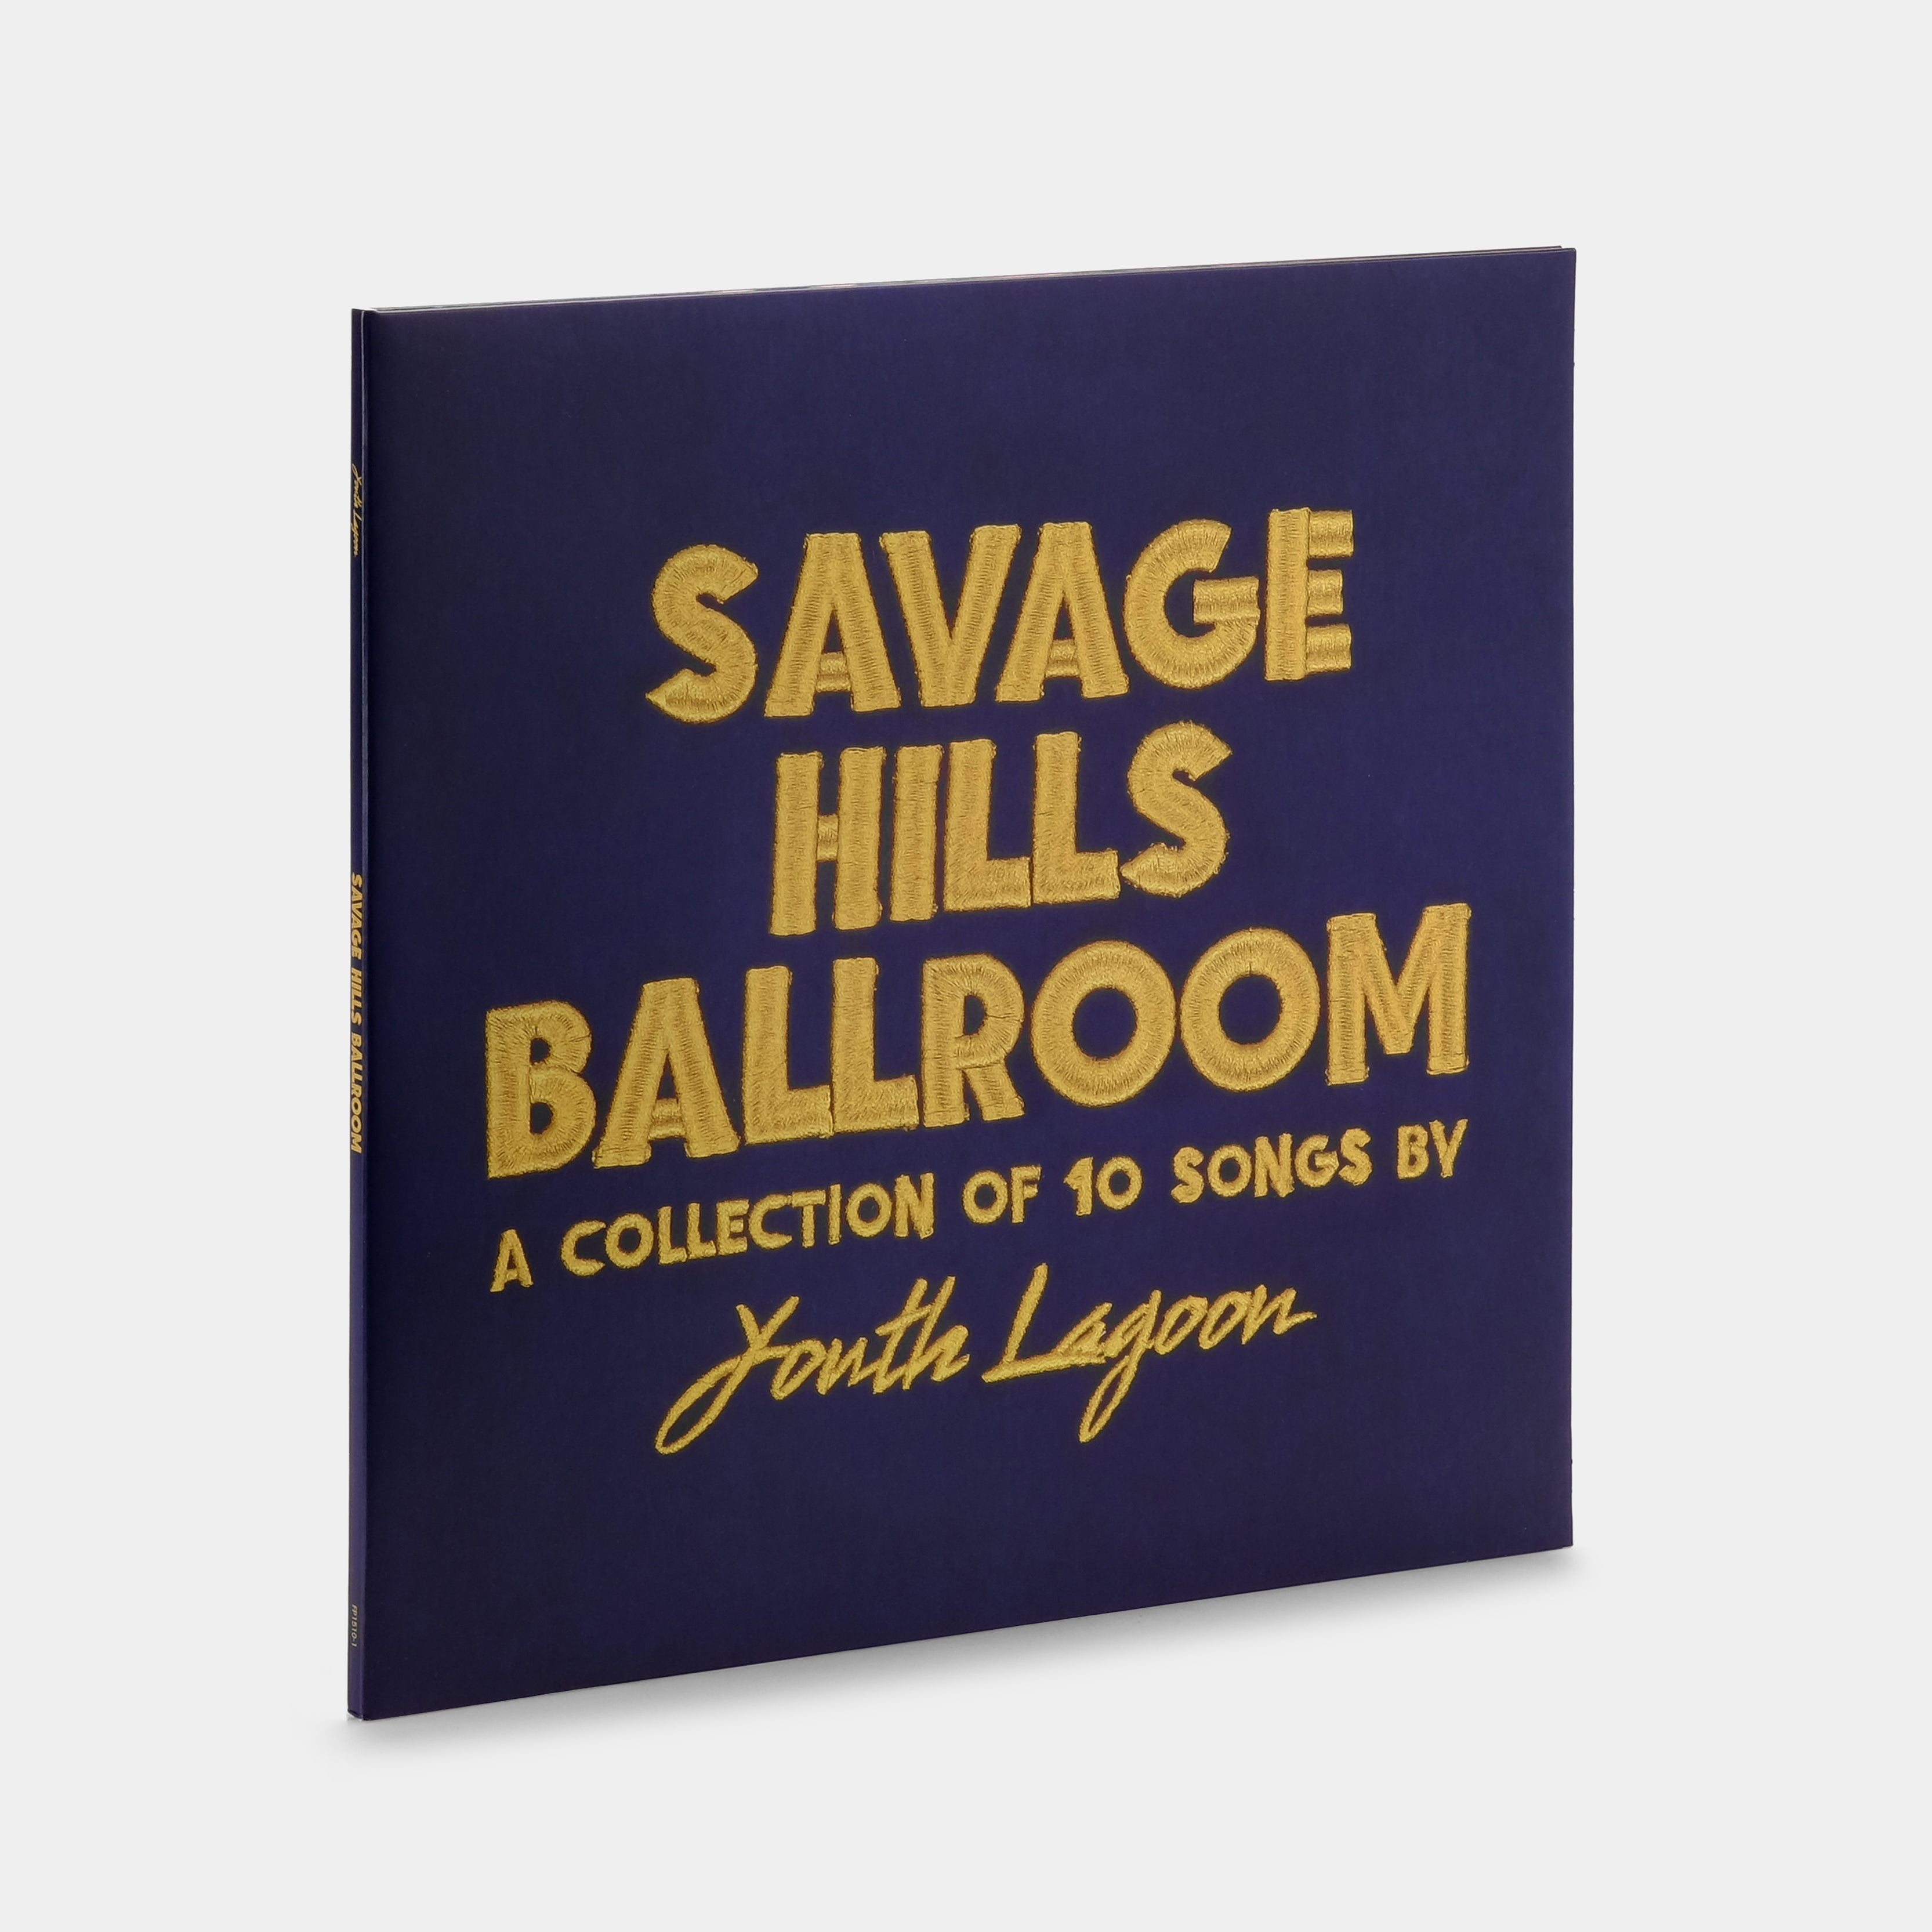 Youth Lagoon - Savage Hills Ballroom LP Vinyl Record